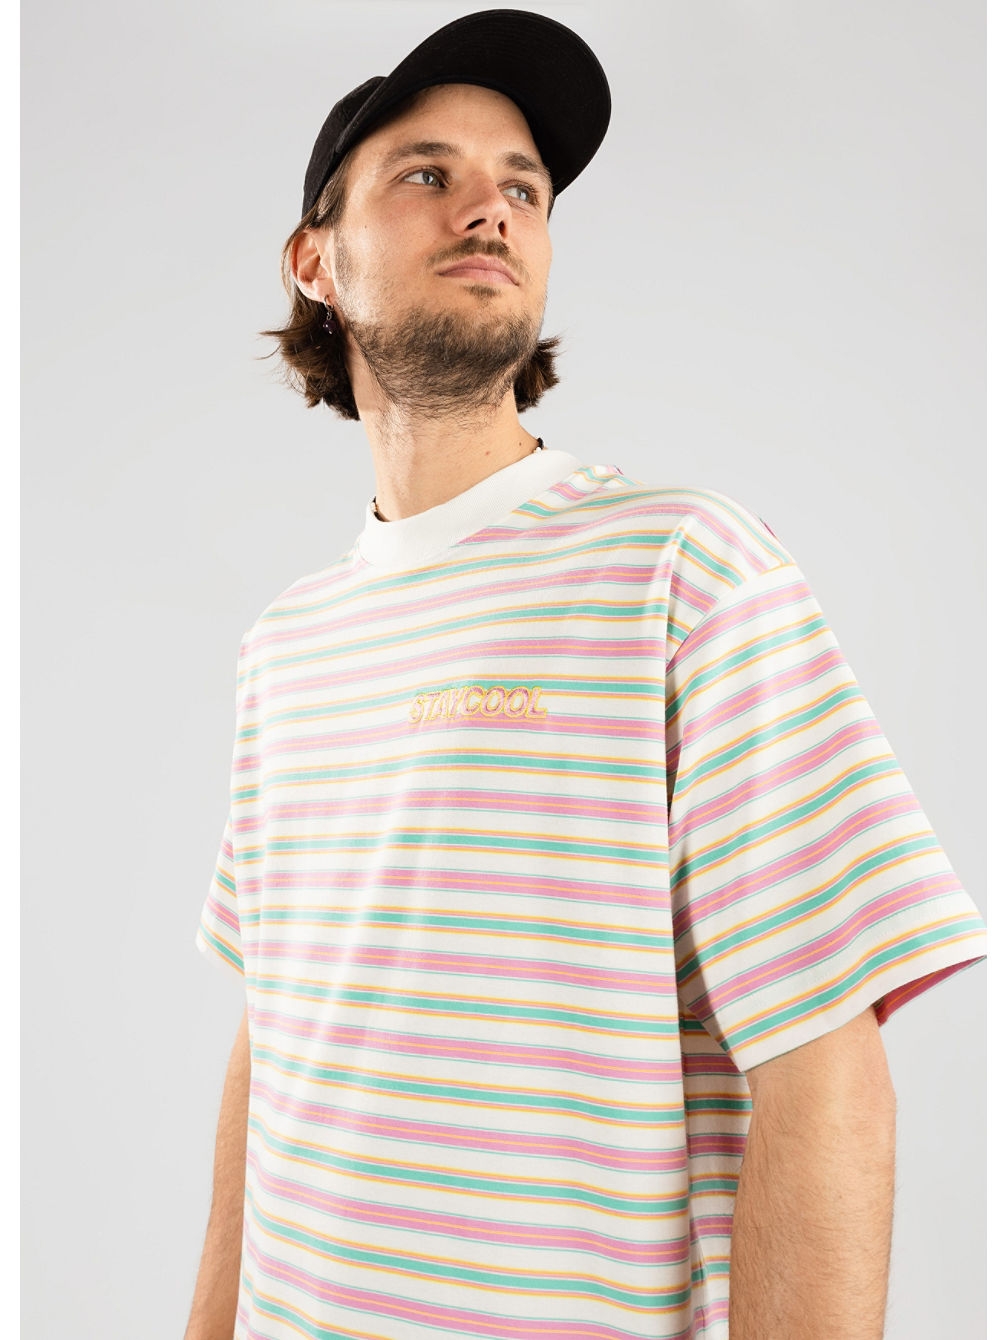 Candy Striped Camiseta